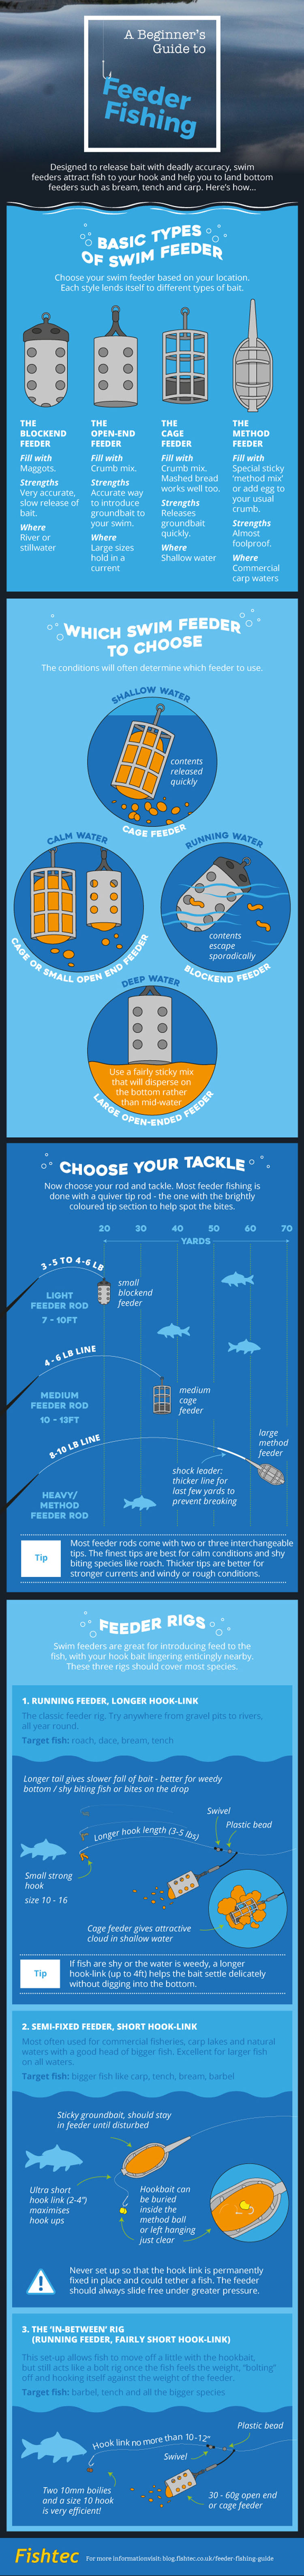 Fishing swim feeders pack of 10 to make posting economical 